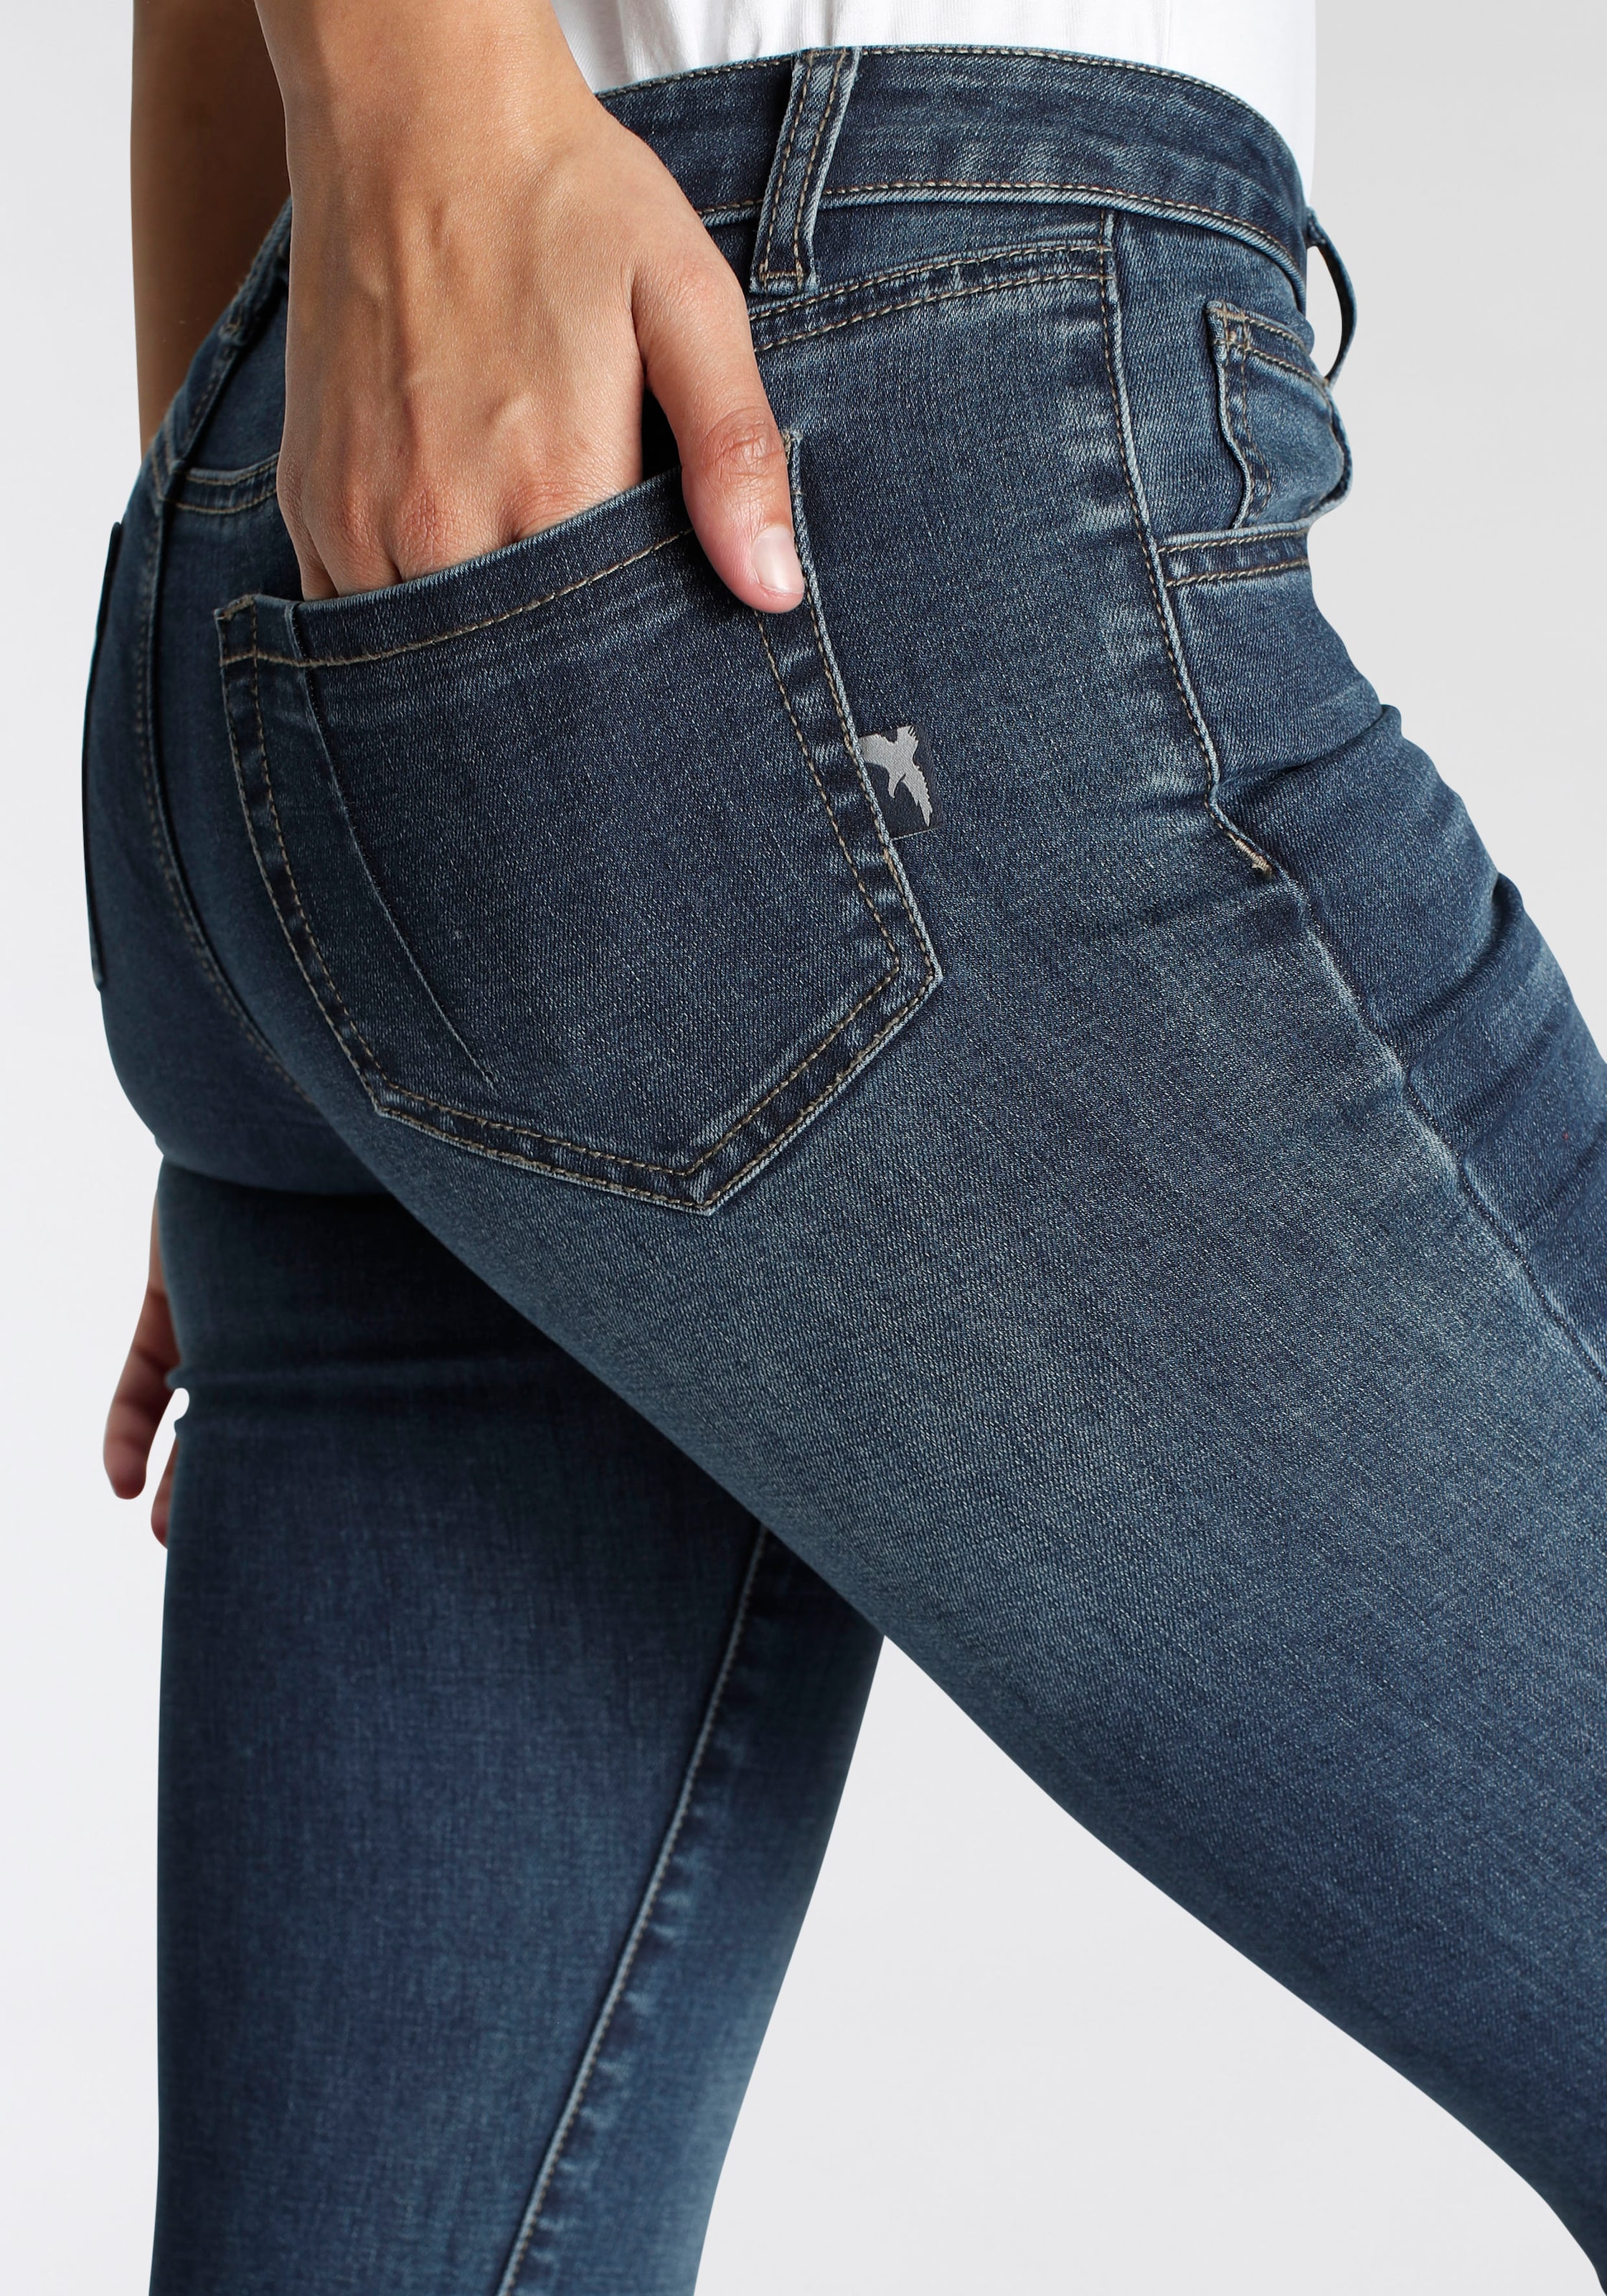 Arizona Skinny-fit-Jeans Denim high normale stretch sehr figurbetont performance Leibhöhe Waist »Ultra-Stretch, kombinieren«, shoppen gut Mid zu bequem